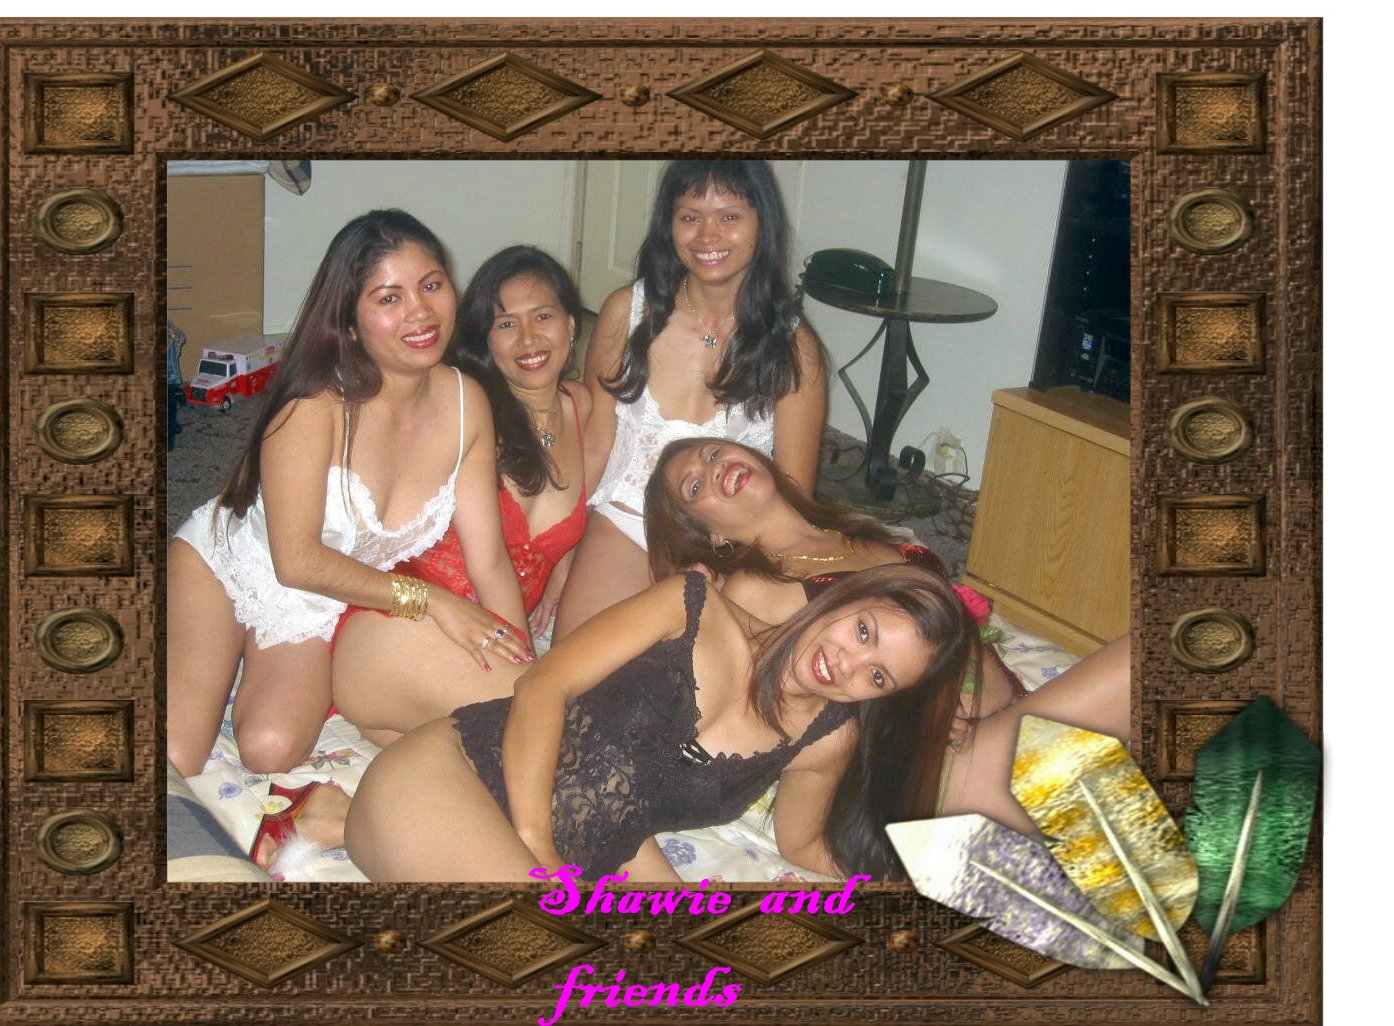 sexy_erotica_and_company_frame.JPG